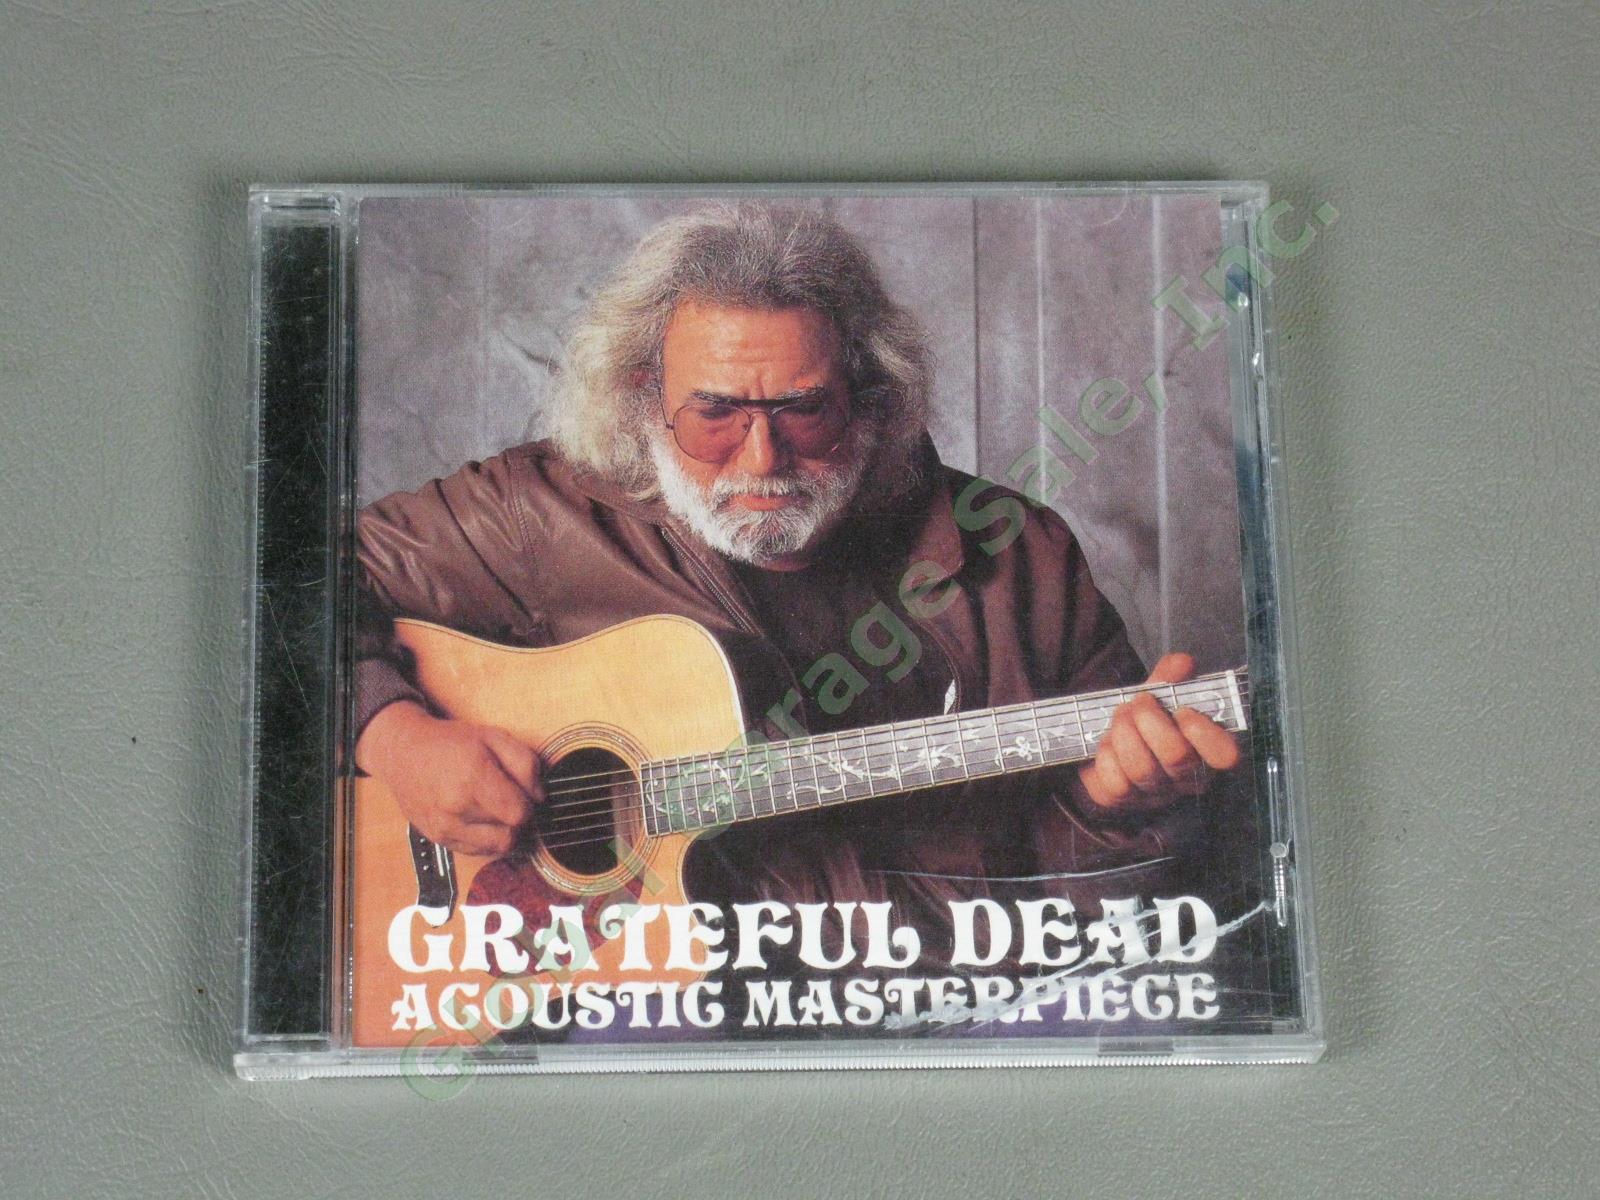 Vtg 1990s Grateful Dead Live Unreleased Show Concert Import CD VHS Lot 16 Discs 13